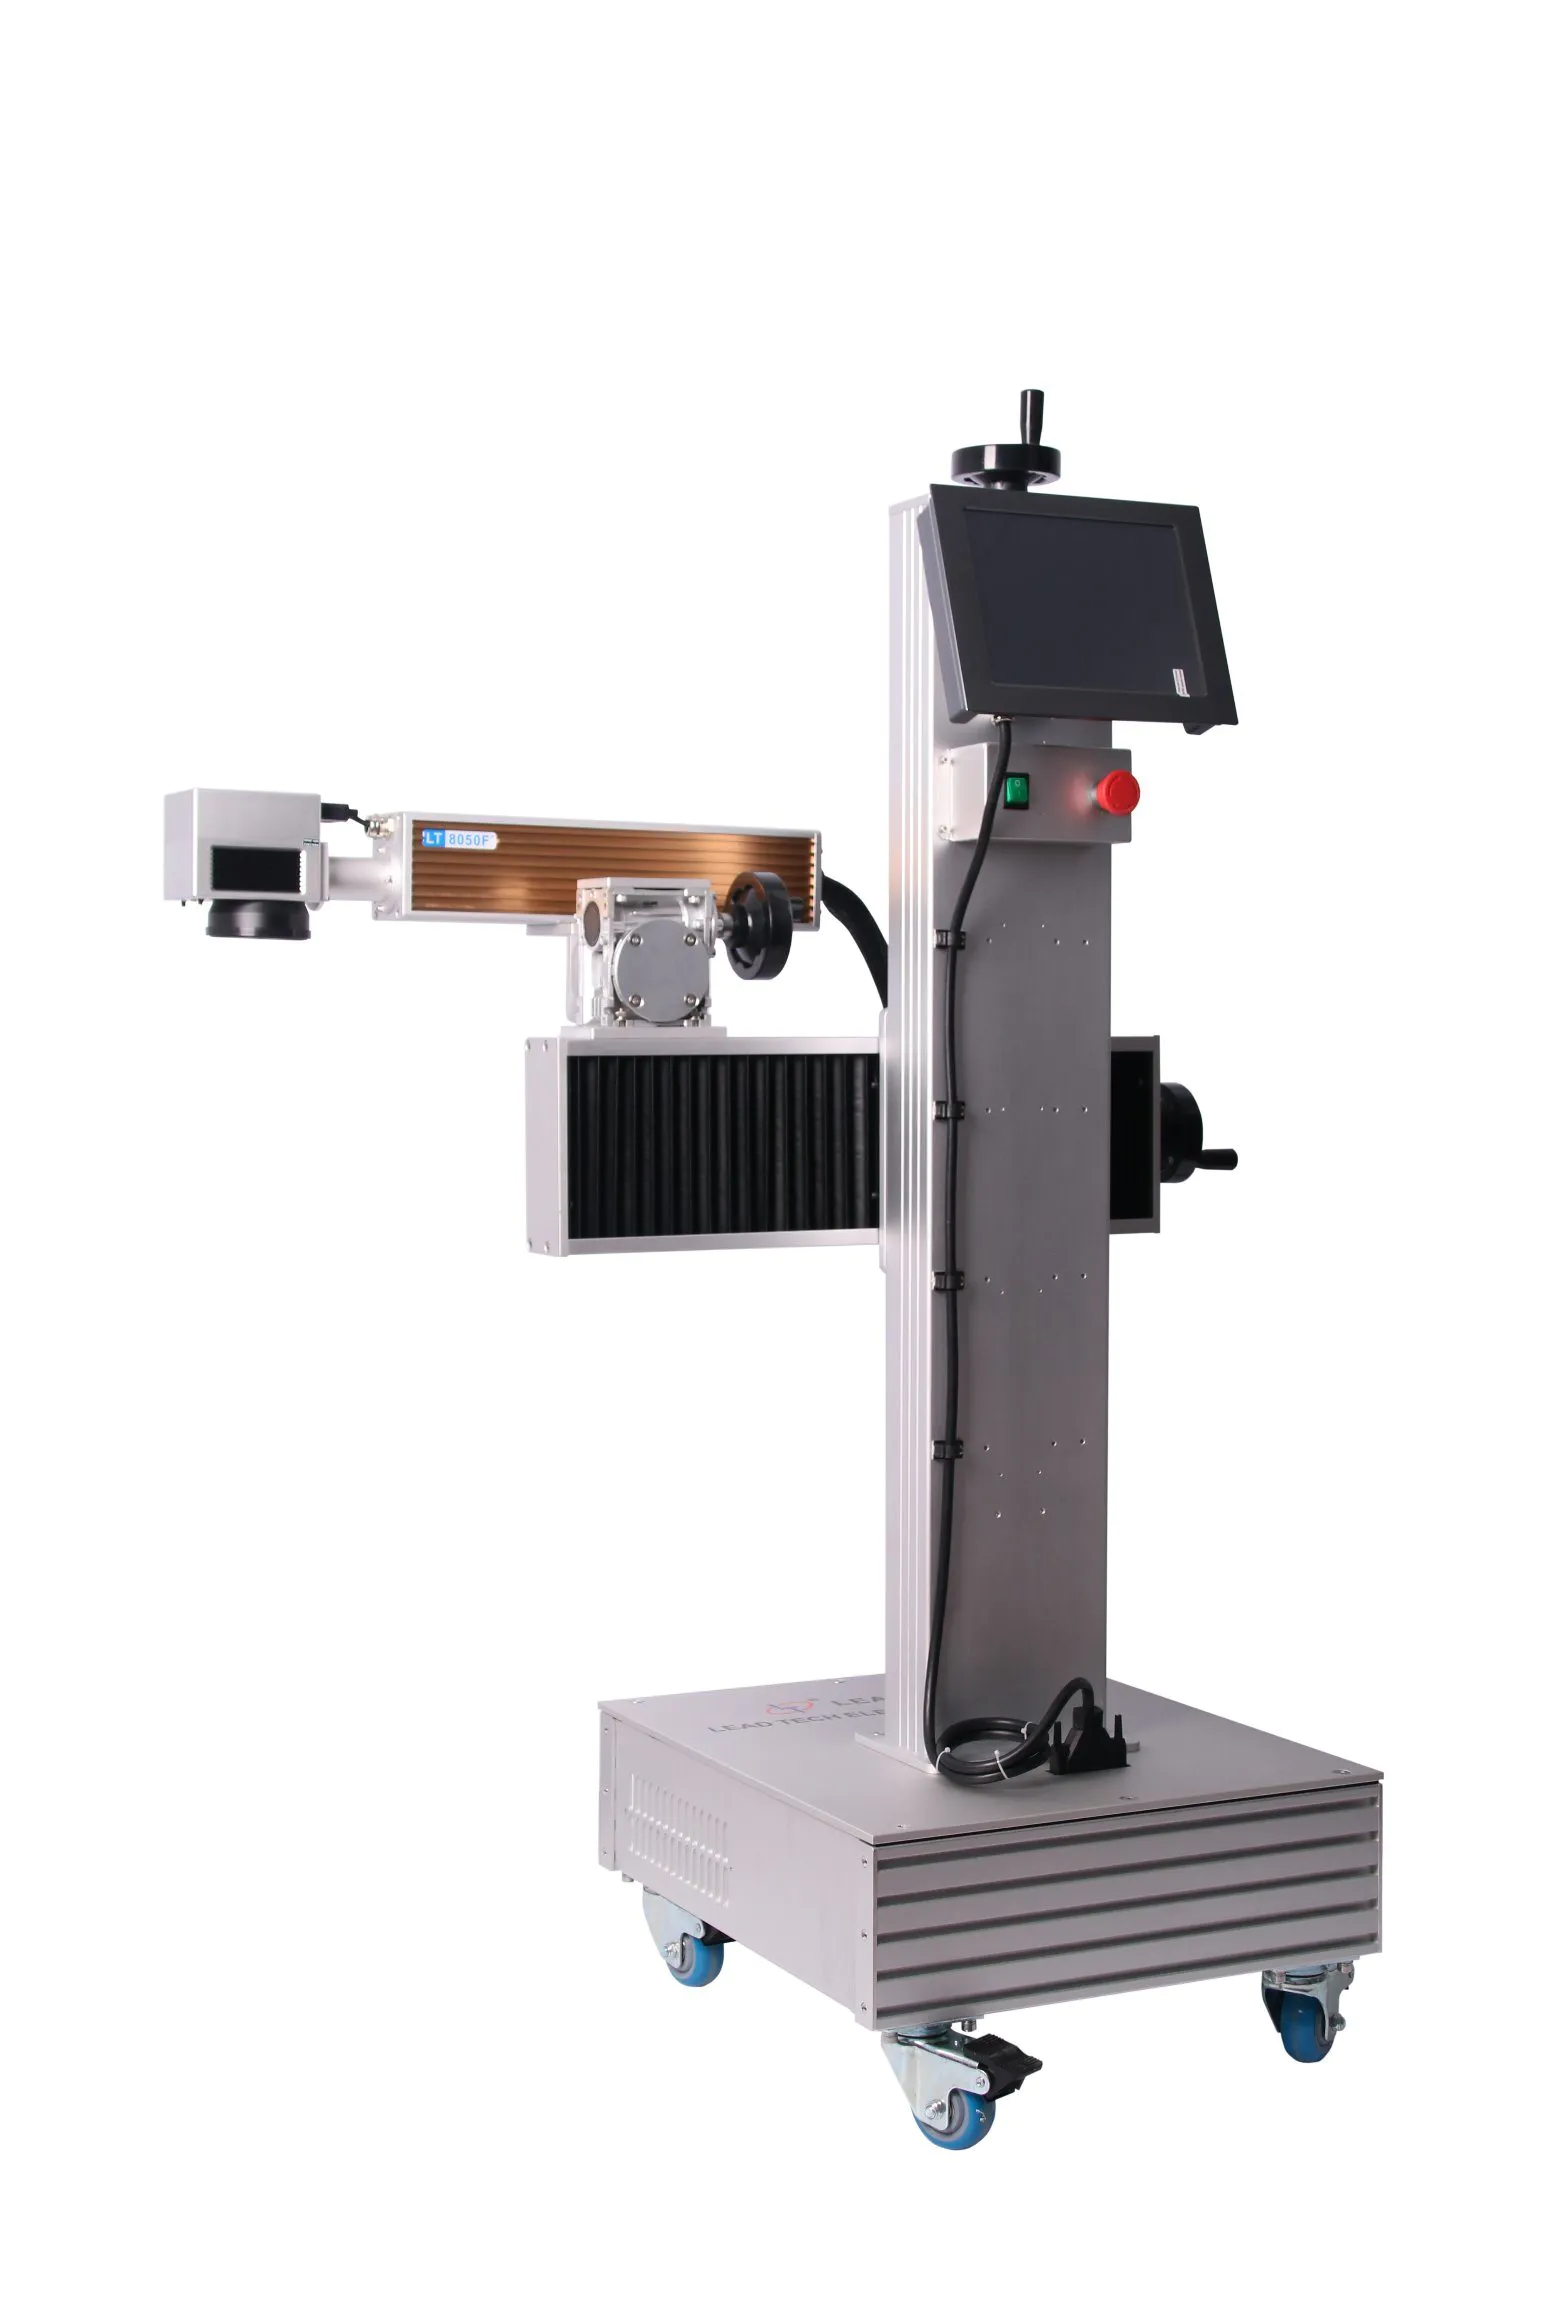 Lt8020f/Lt8030f/Lt8050f Fiber 20W/30W/50W High Speed Digital Laser Marking Printer for PVC Pipe Marking